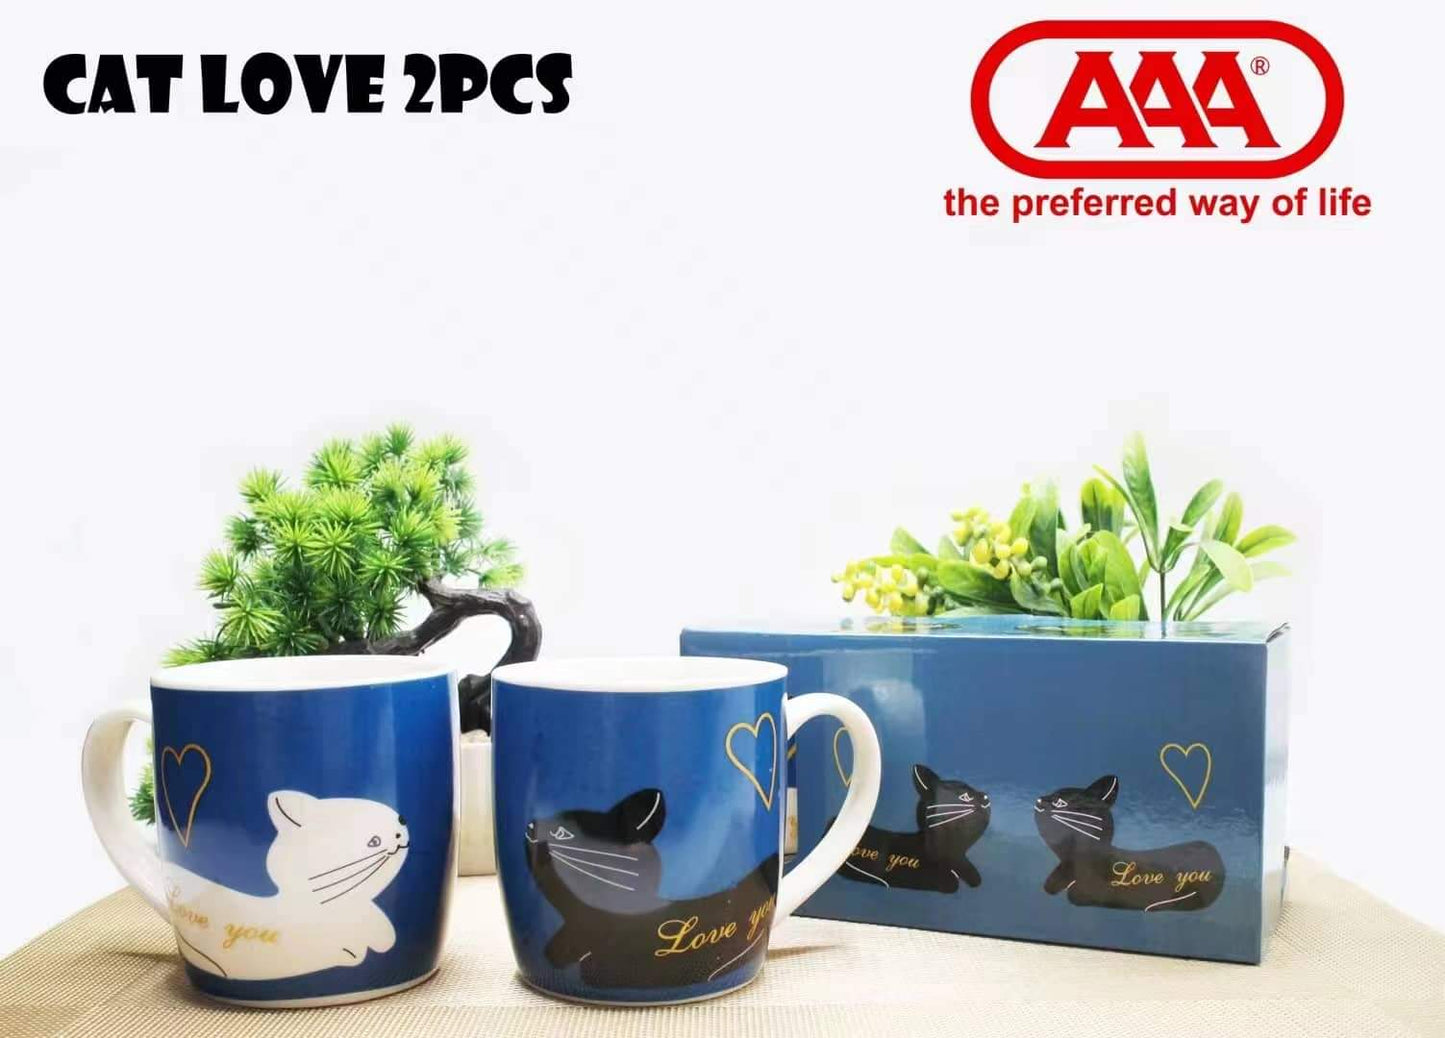 2-Piece Coffee Mug Gift Set